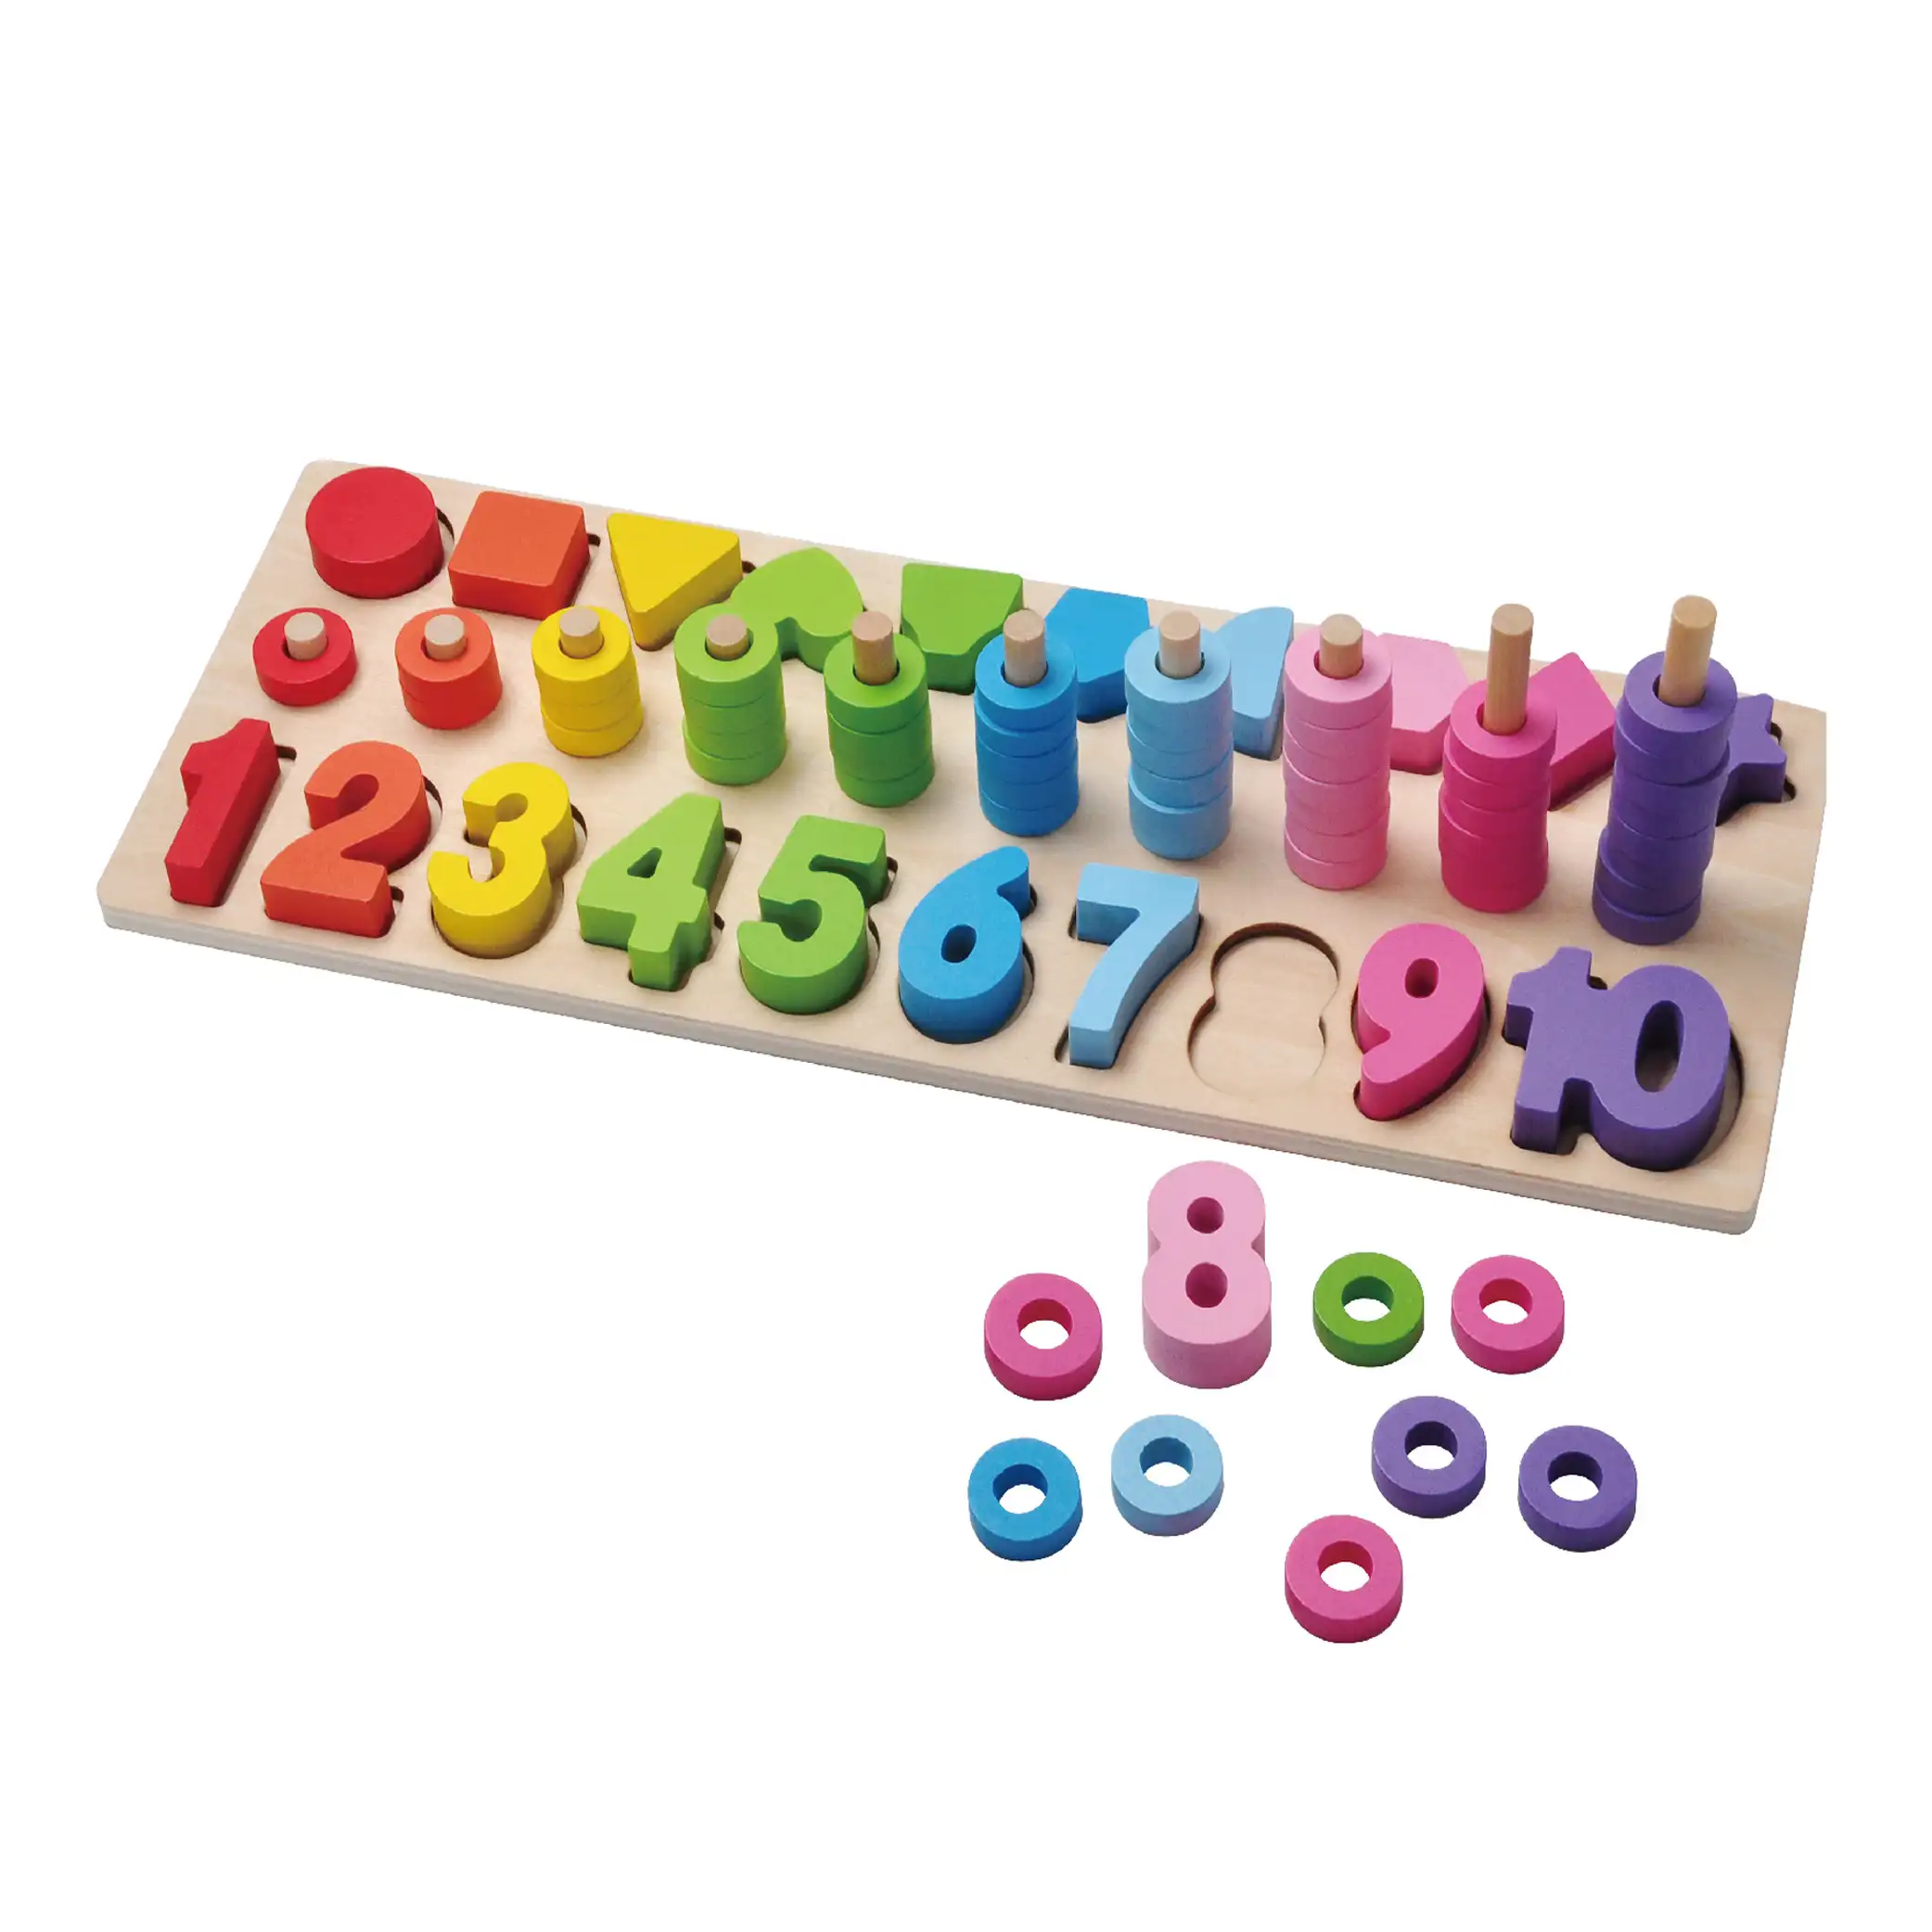 1 में 3 आकार शैक्षिक खिलौना सीखने संज्ञानात्मक ज्यामितीय आकार गणित लकड़ी संख्या ब्लॉक